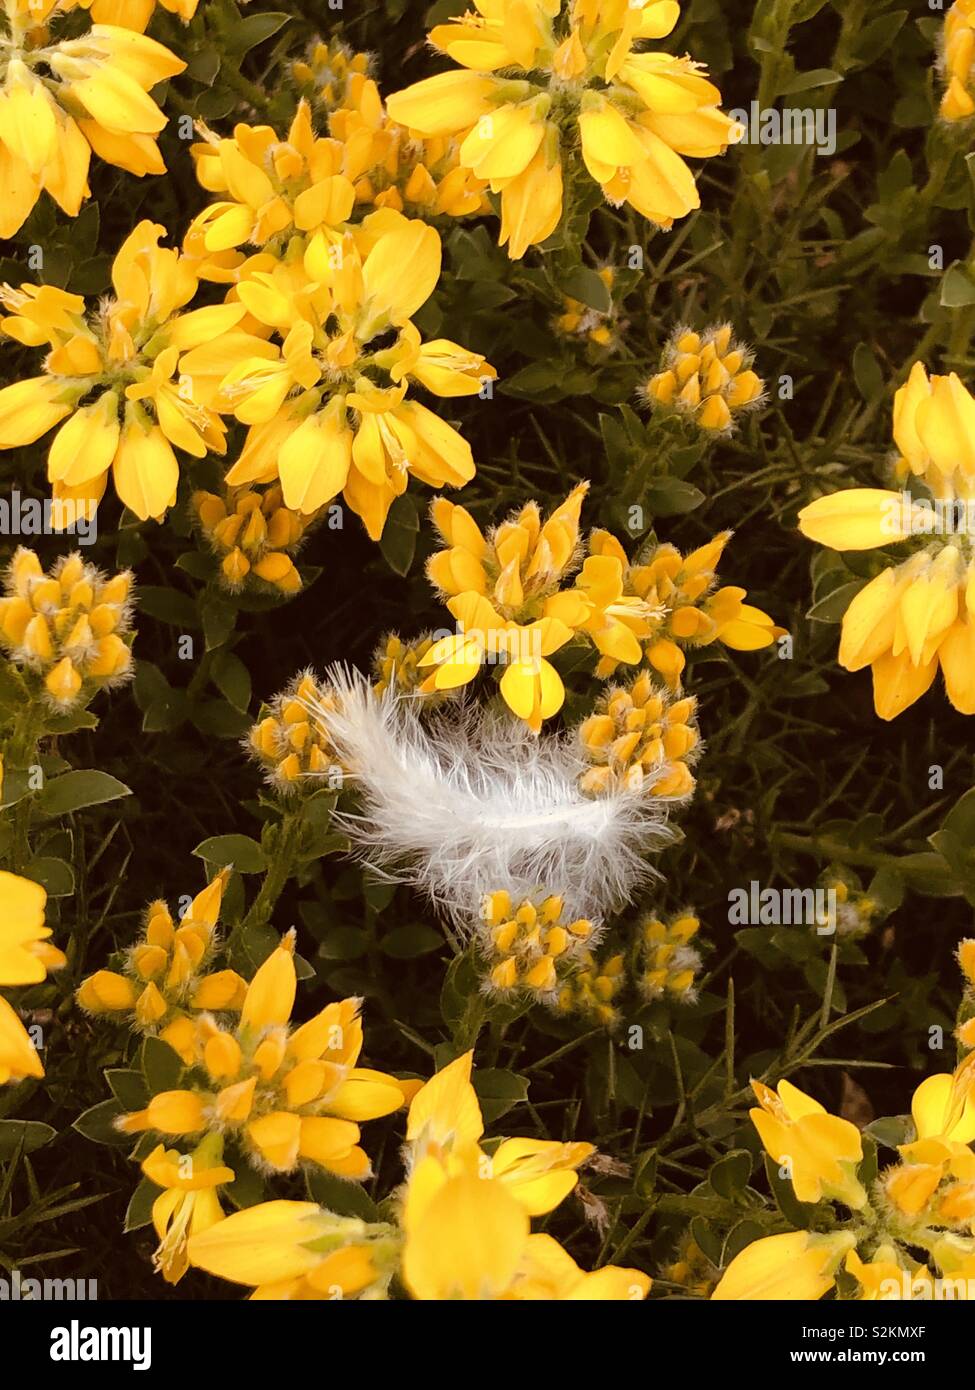 A bird feather nestled amongst flowers Stock Photo